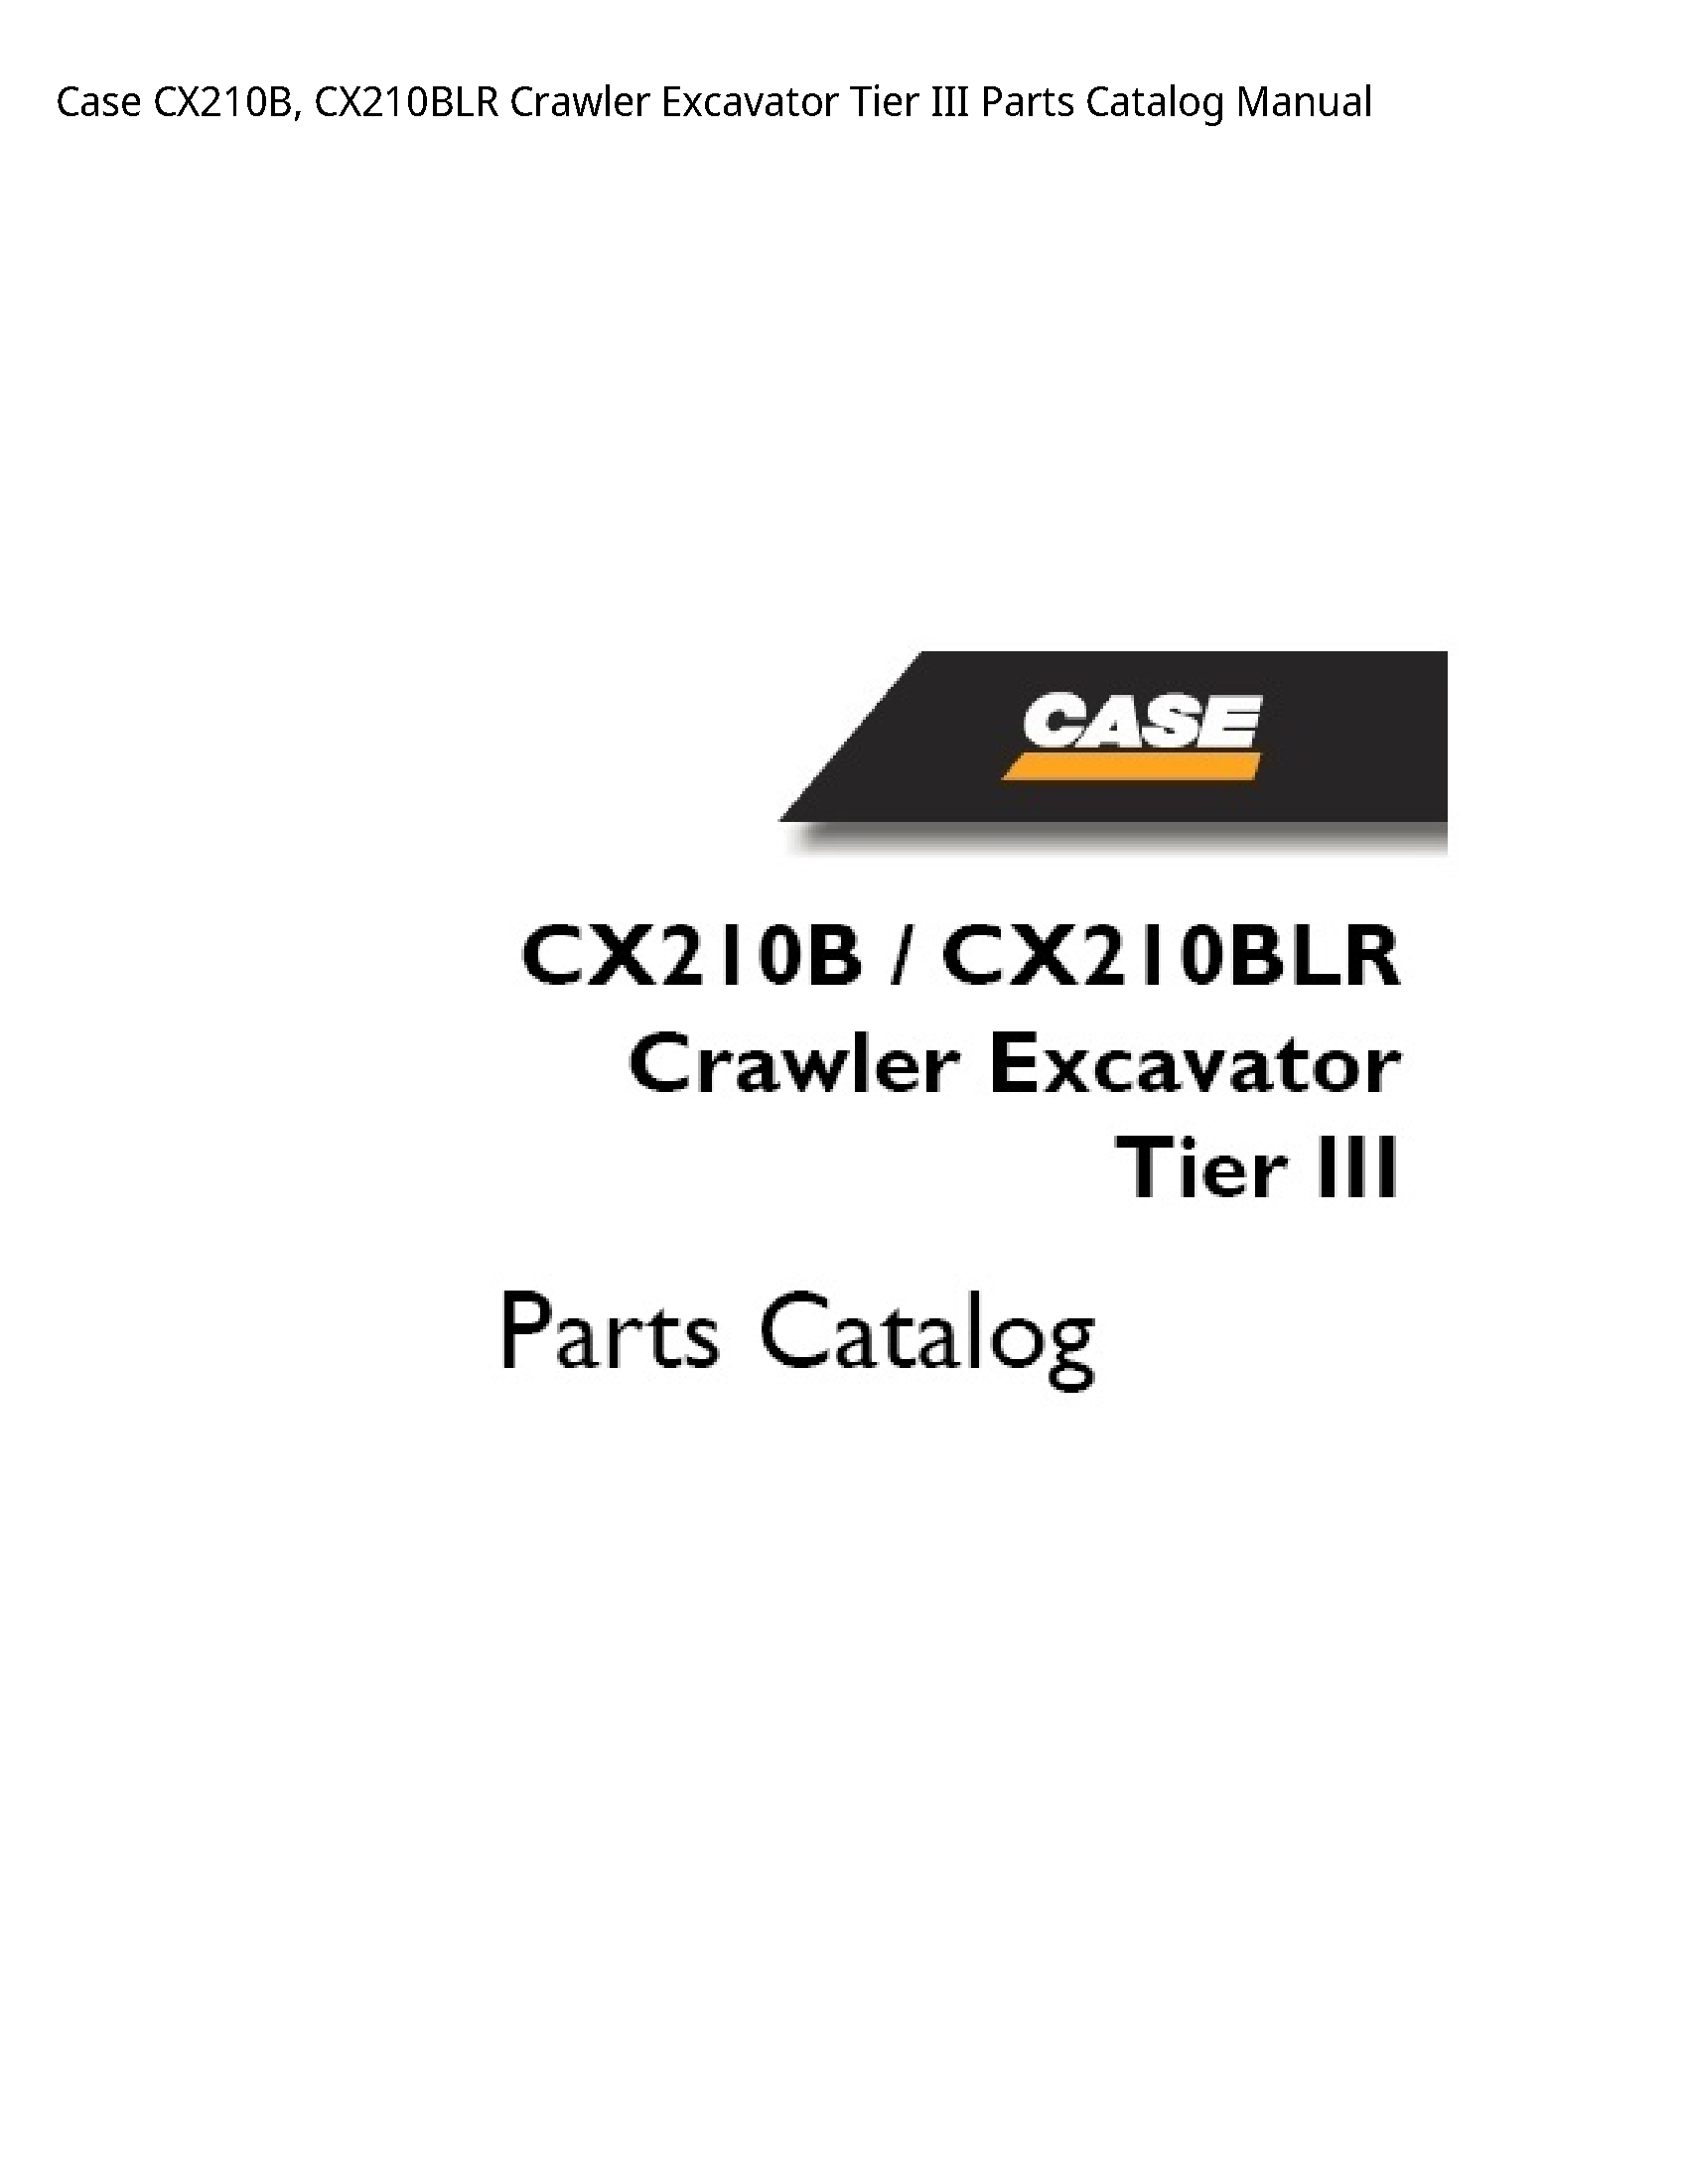 Case/Case IH CX210B Crawler Excavator Tier III Parts Catalog manual